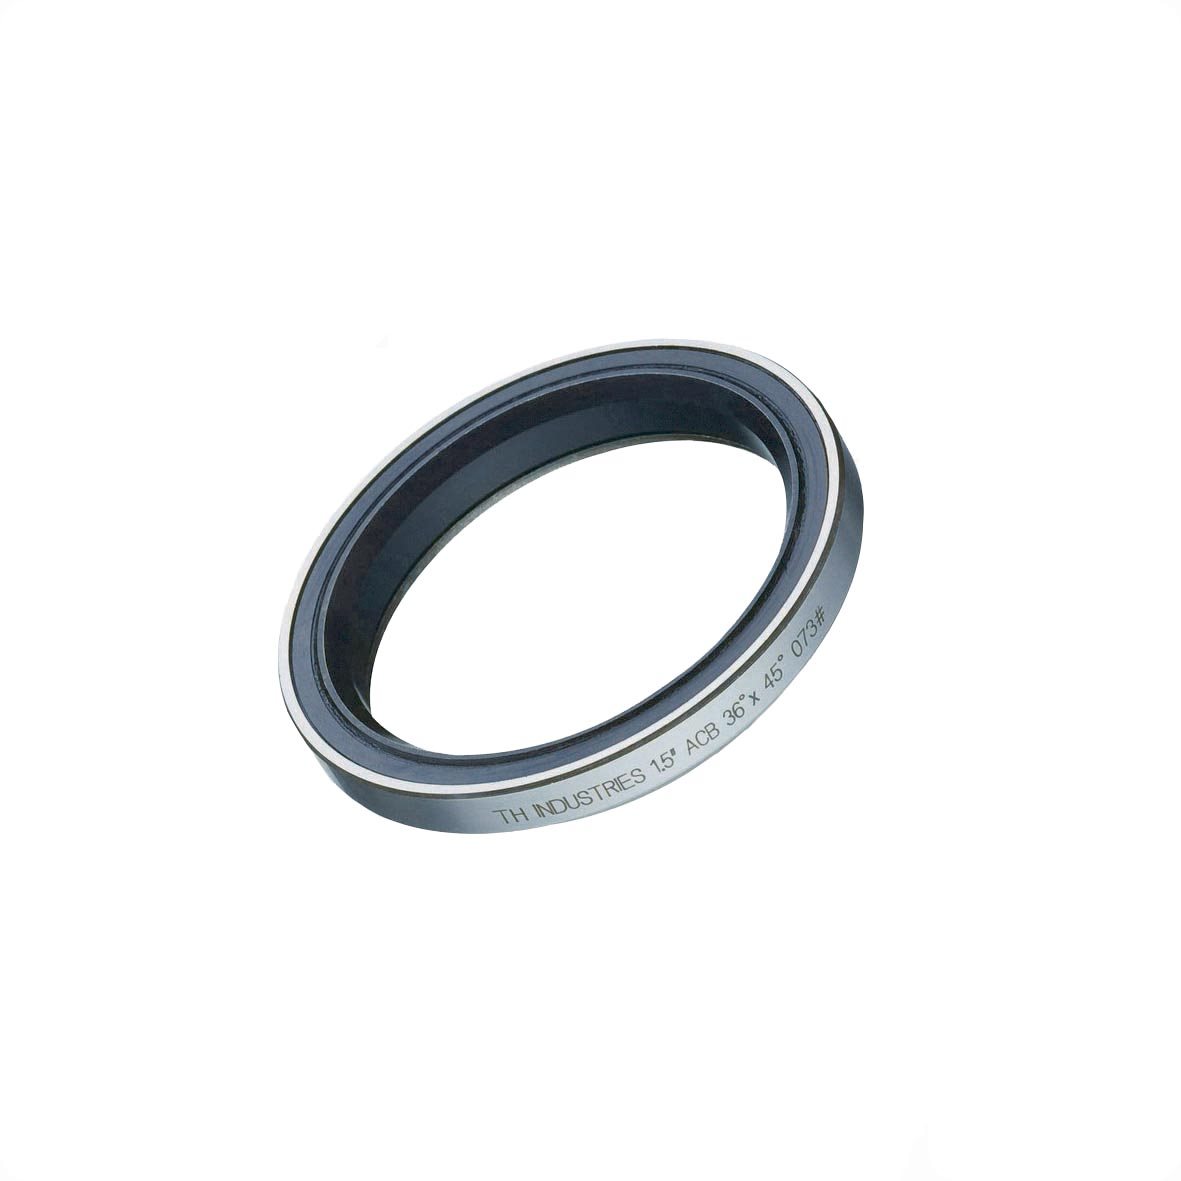 Sealed bearing 1.5'' TH-073 ACB 36°x45° single seal MR127